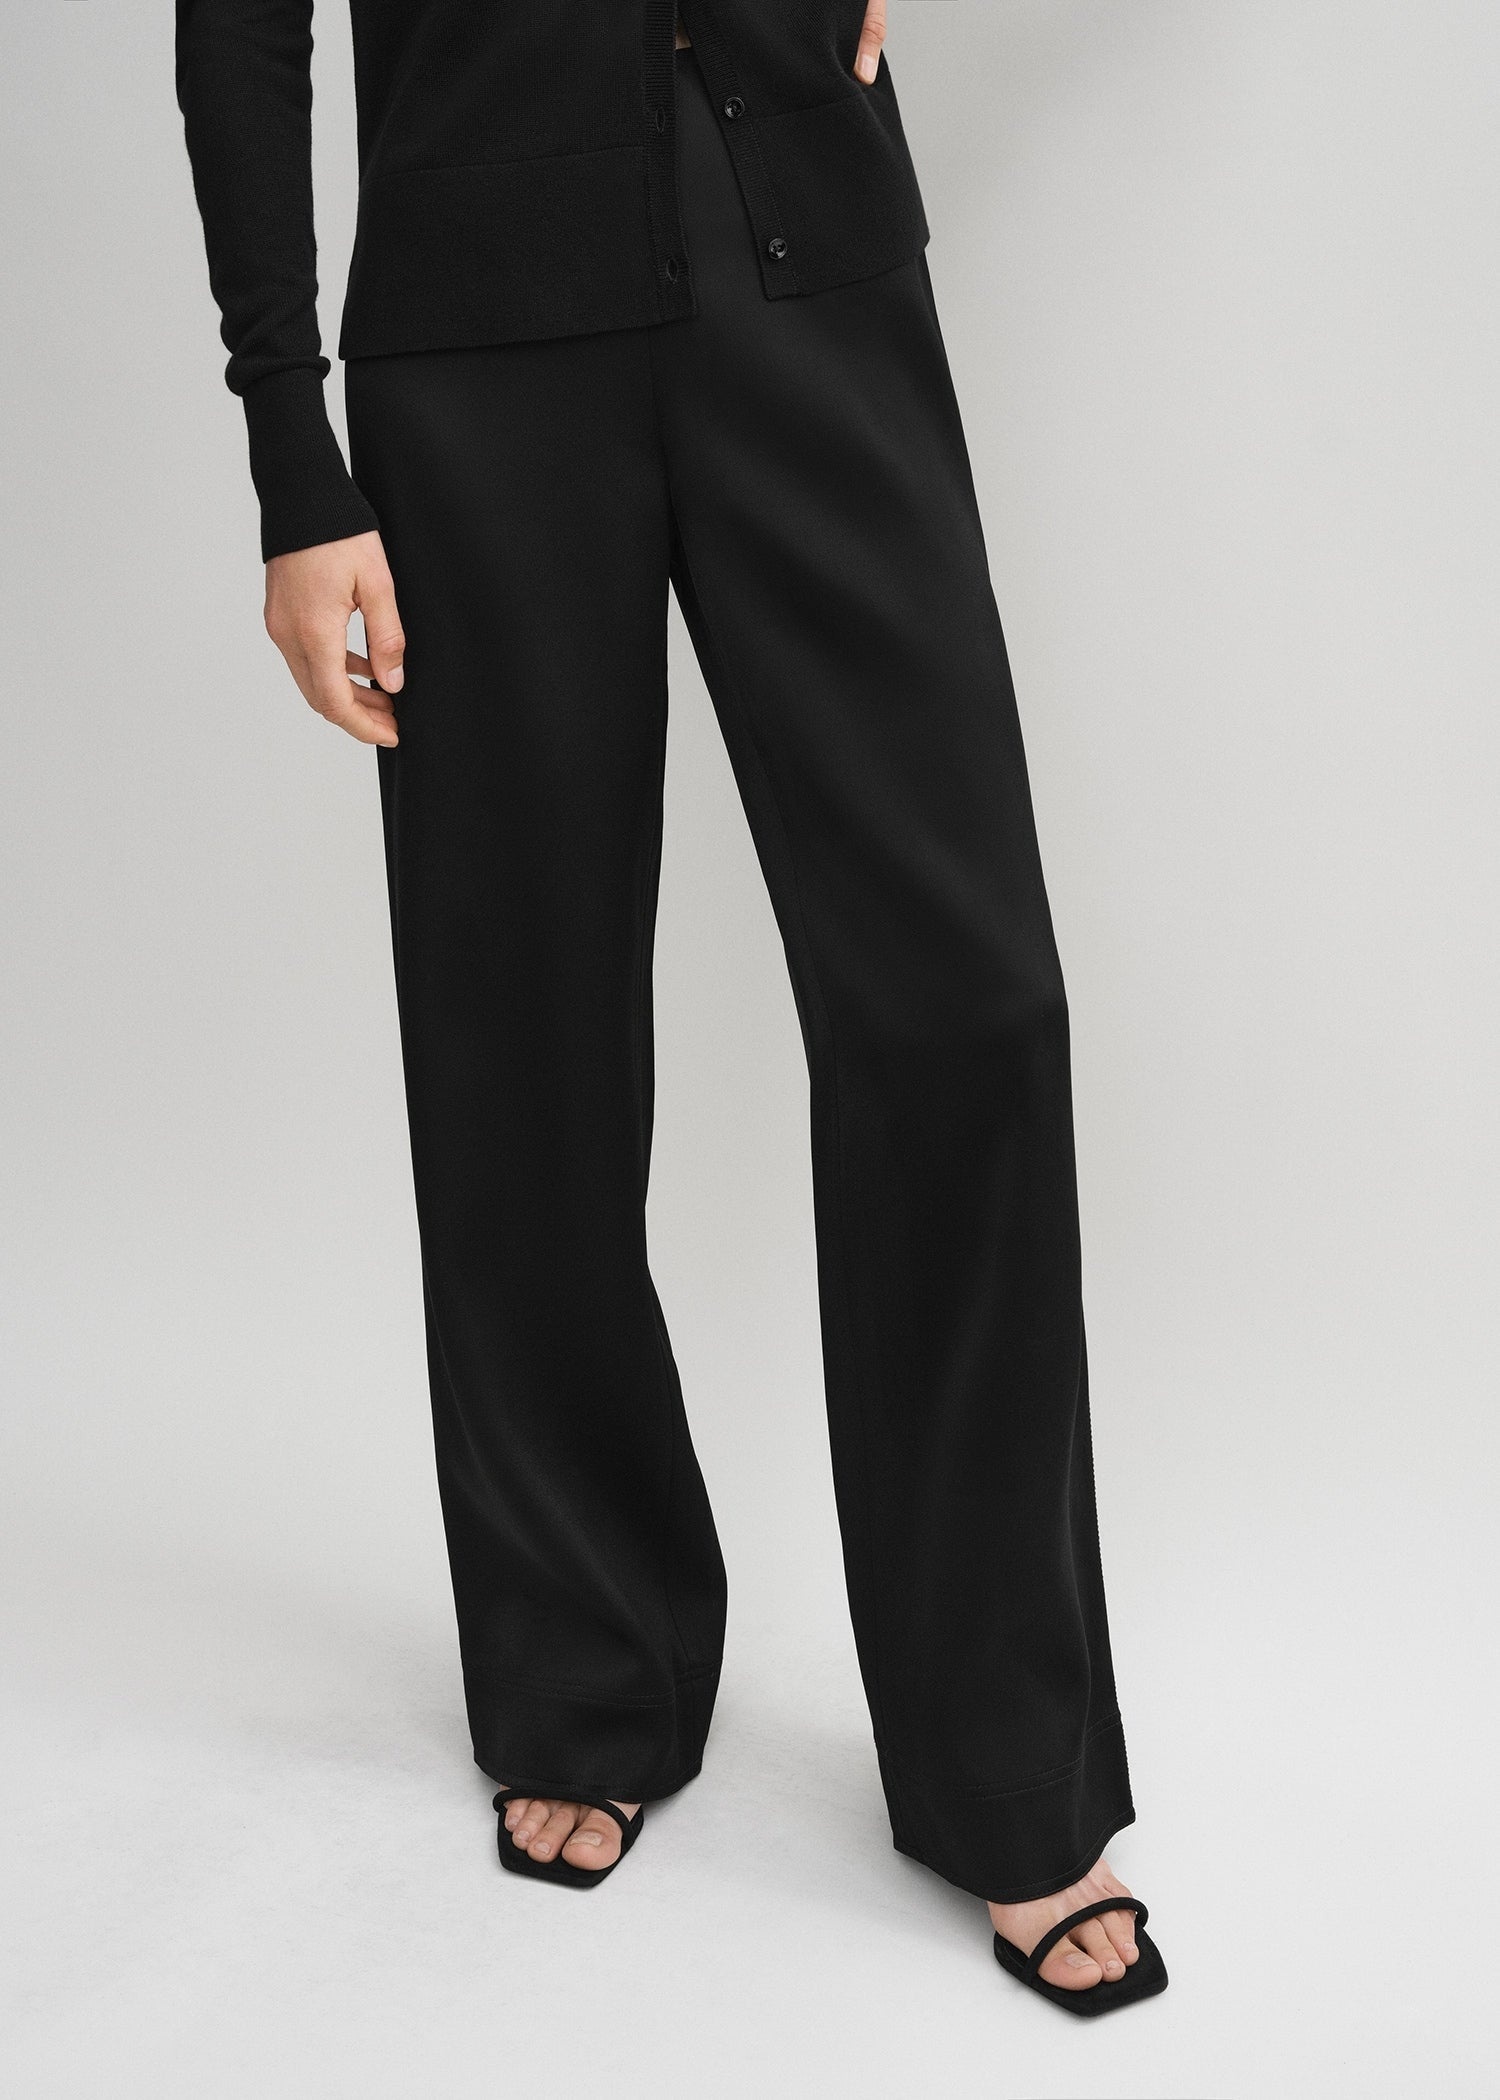 Contrast satin trousers black - 5